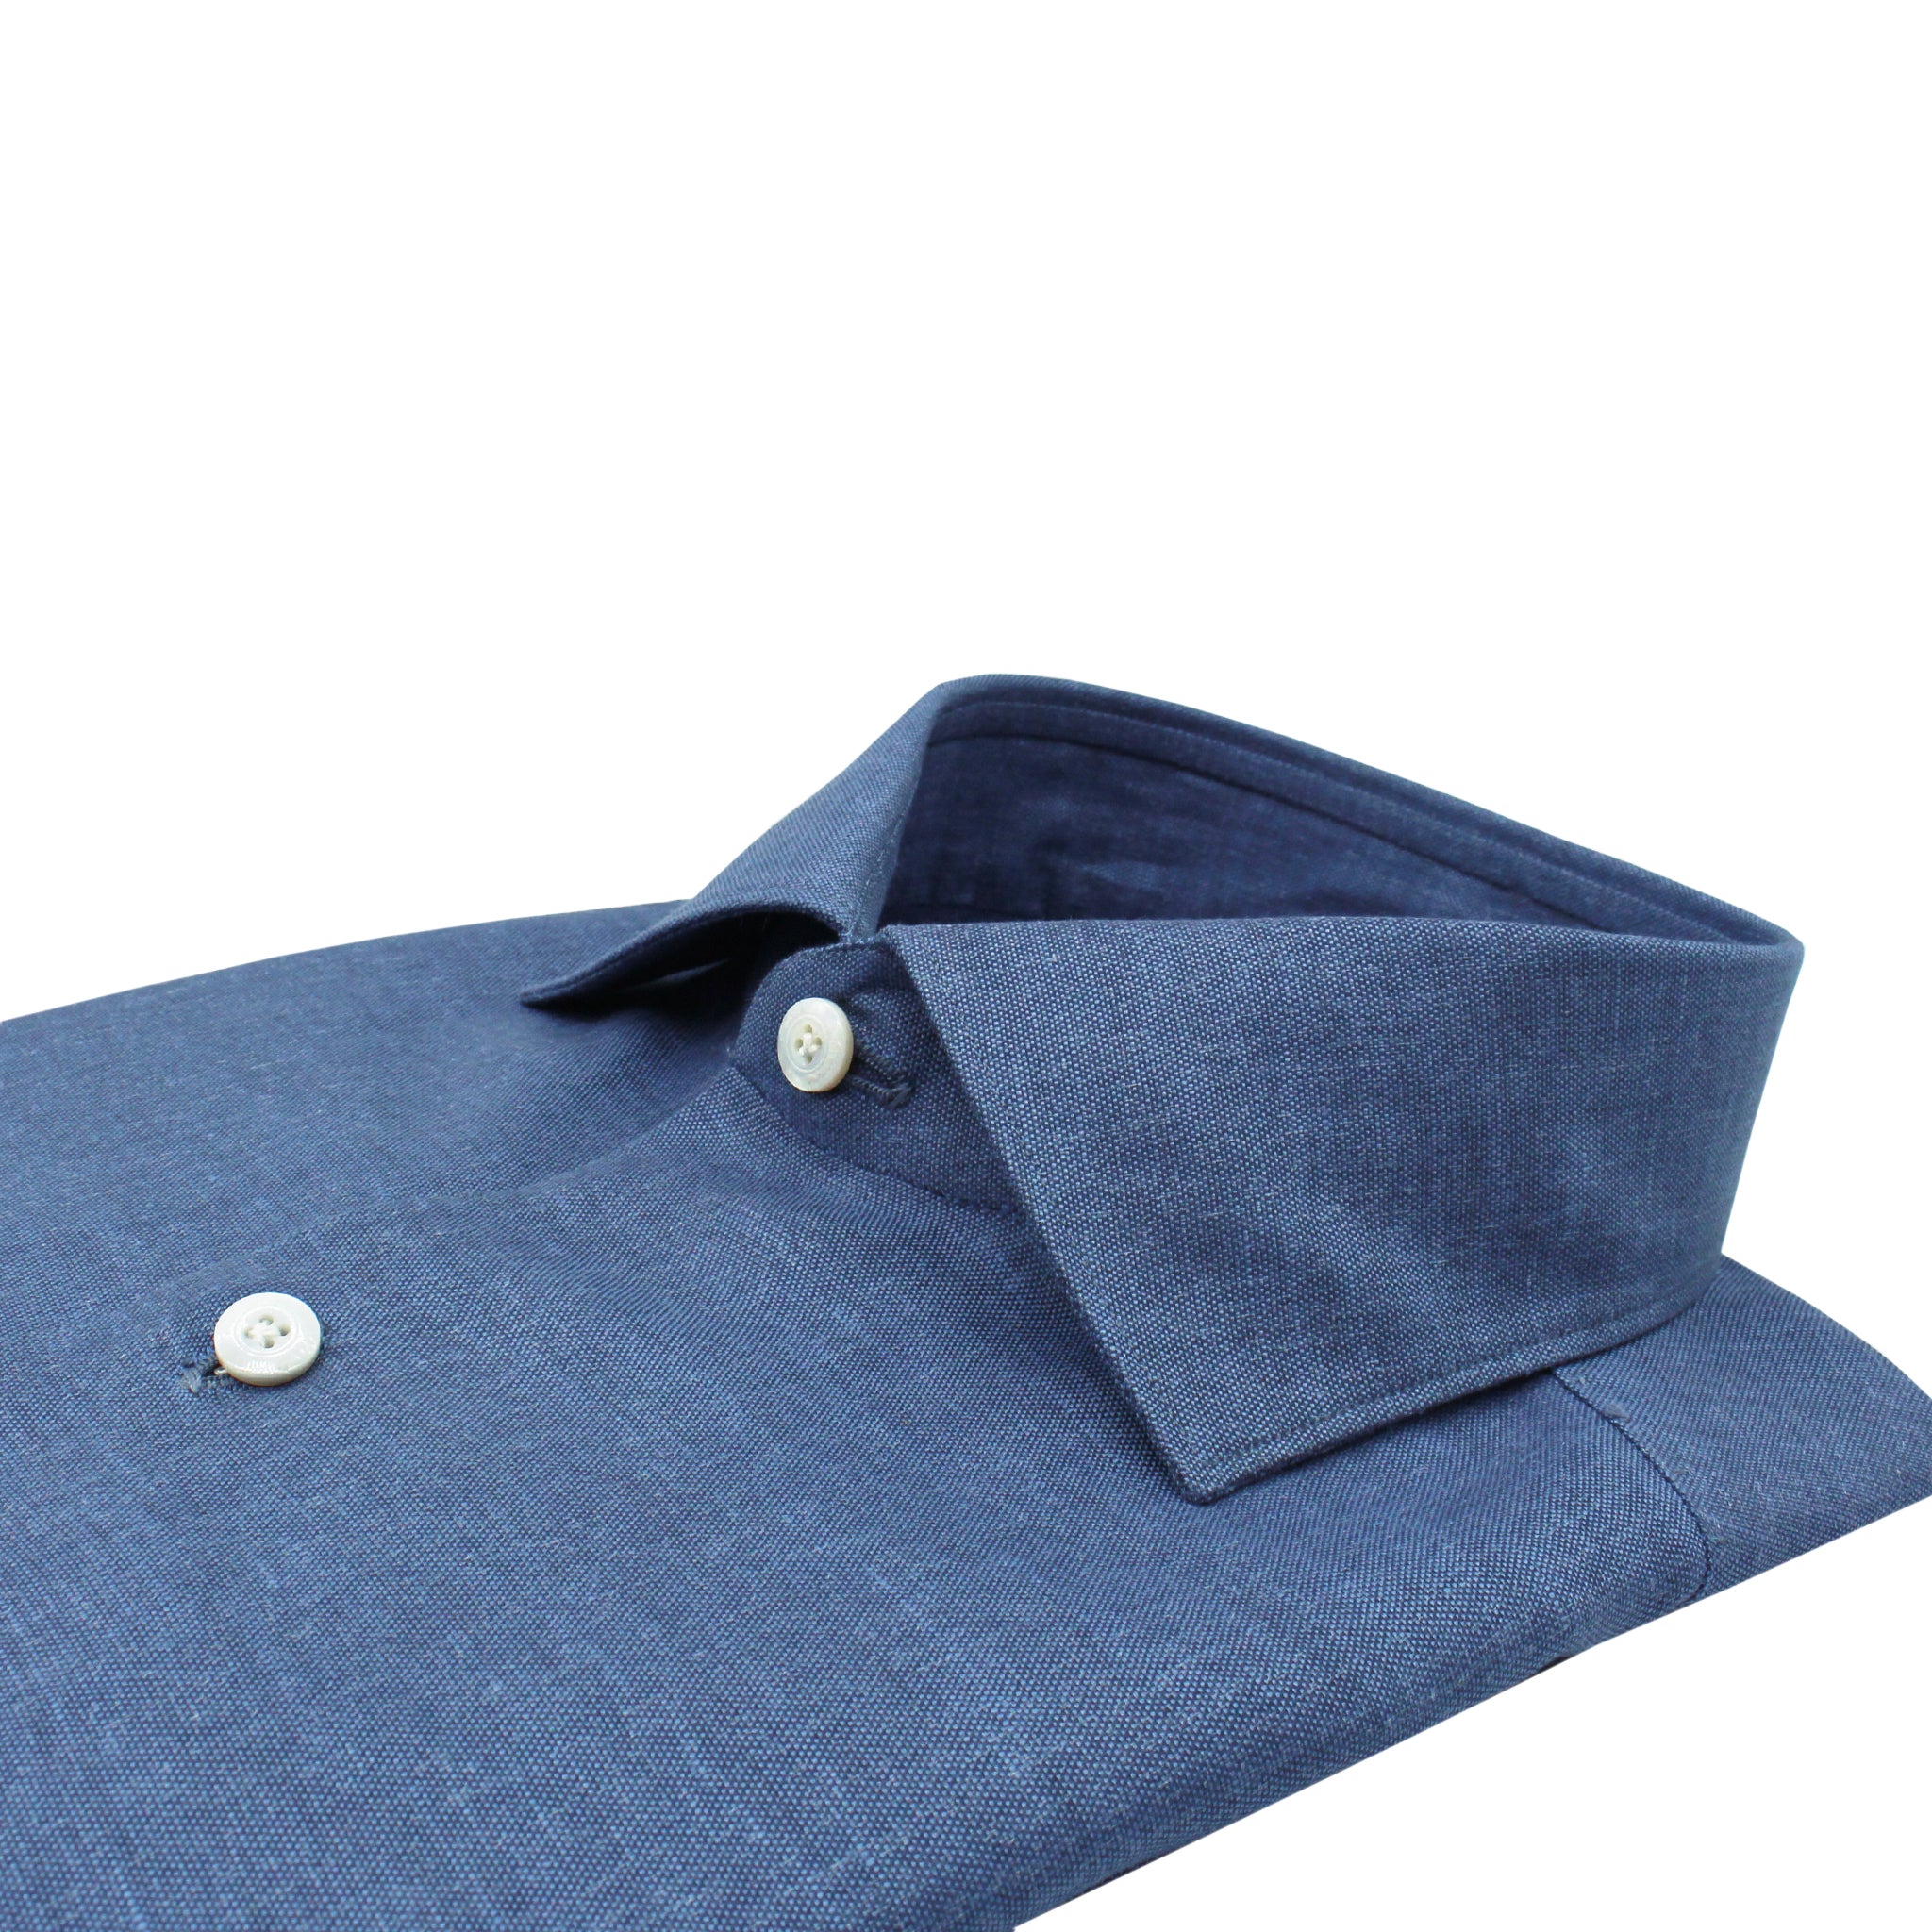 Slim fit shirt Milano blue Carlo Riva fabric